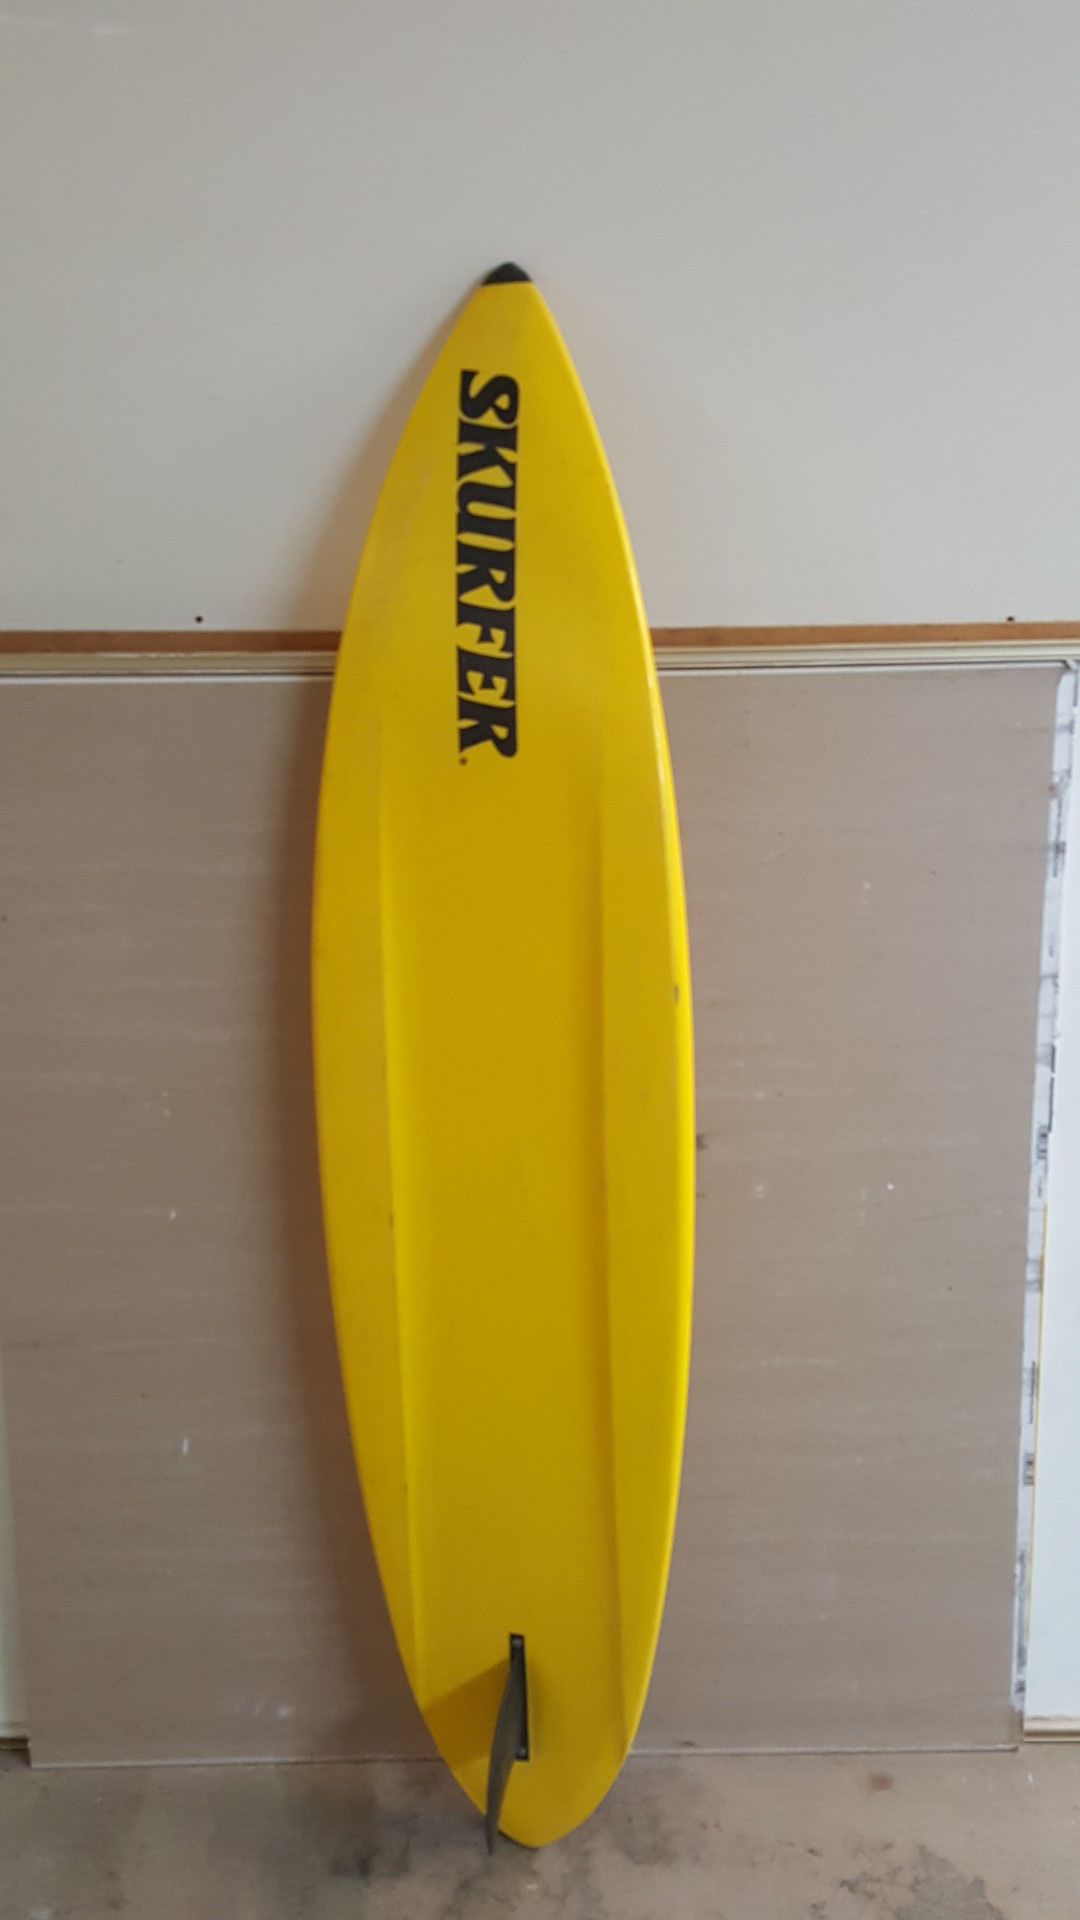 SKURFER SURF BOARD for Sale in Canoga Park, CA - OfferUp